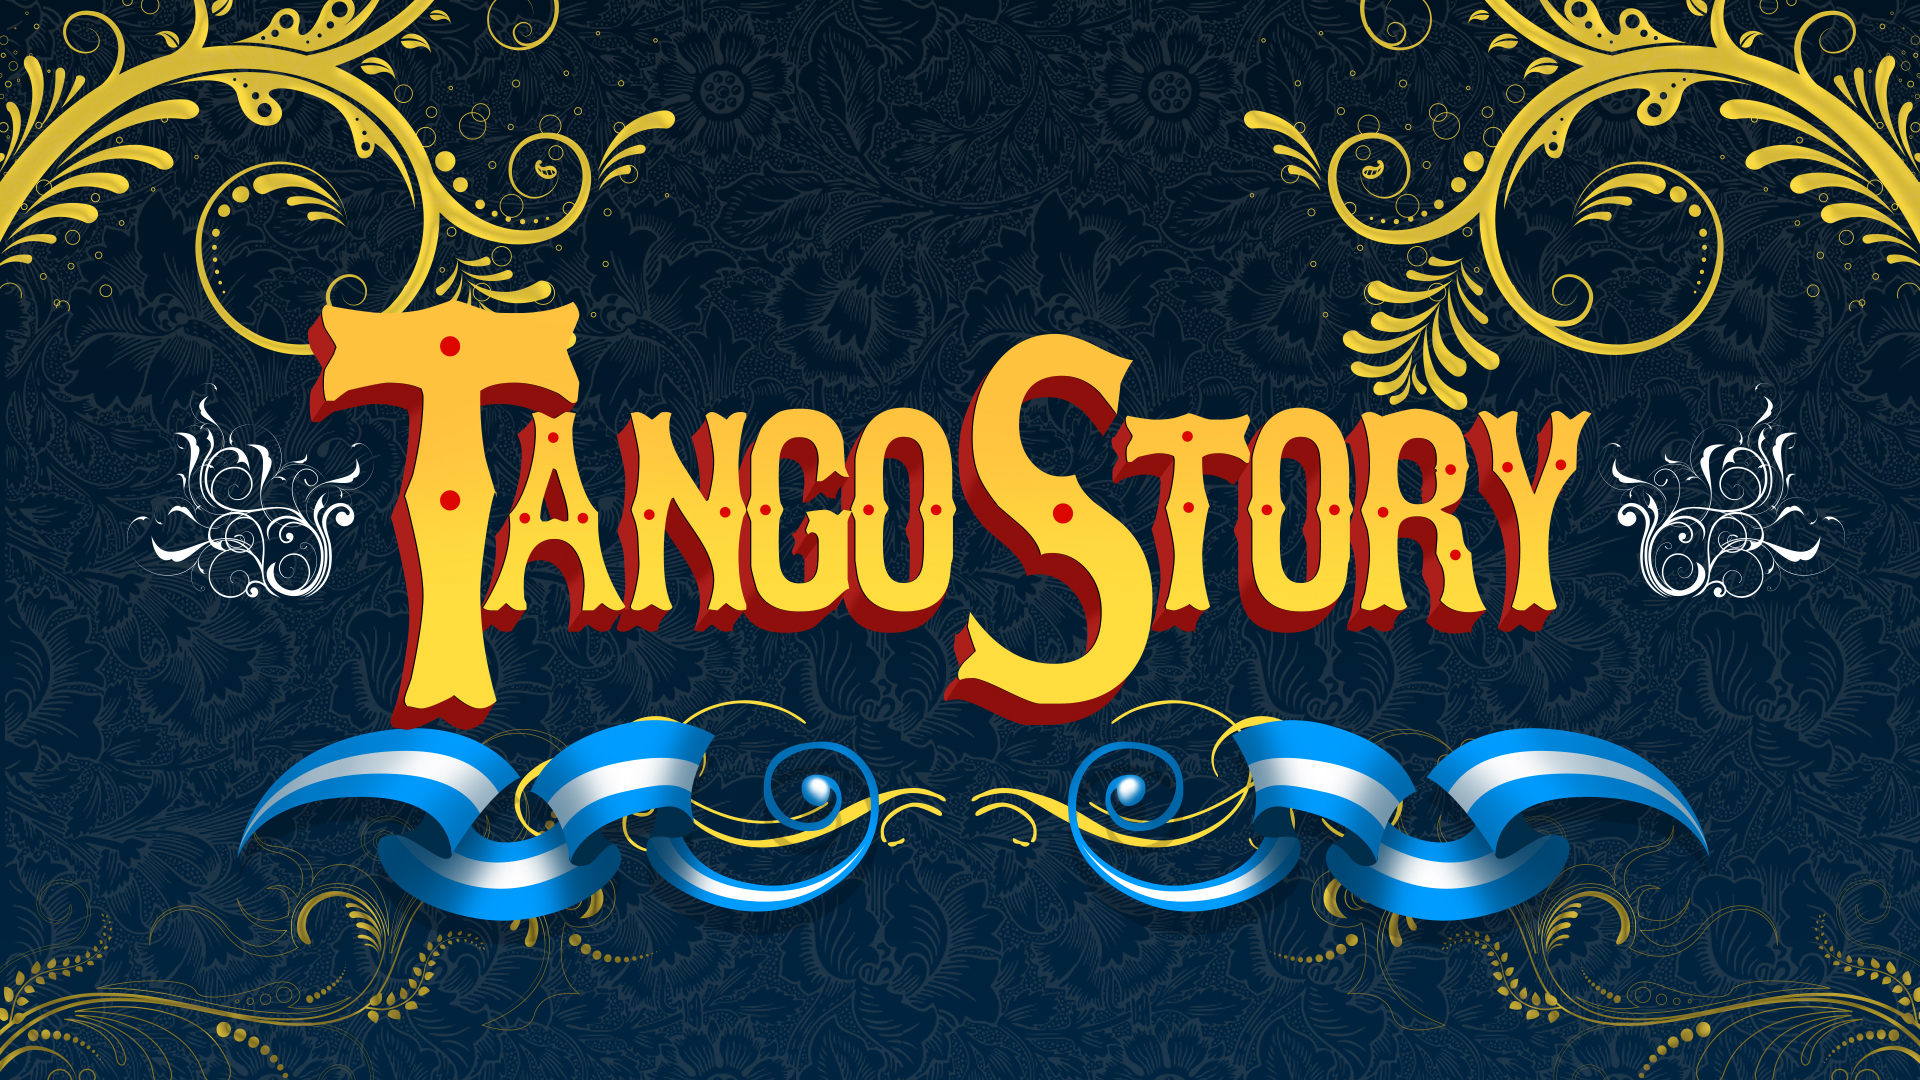 TangoStory